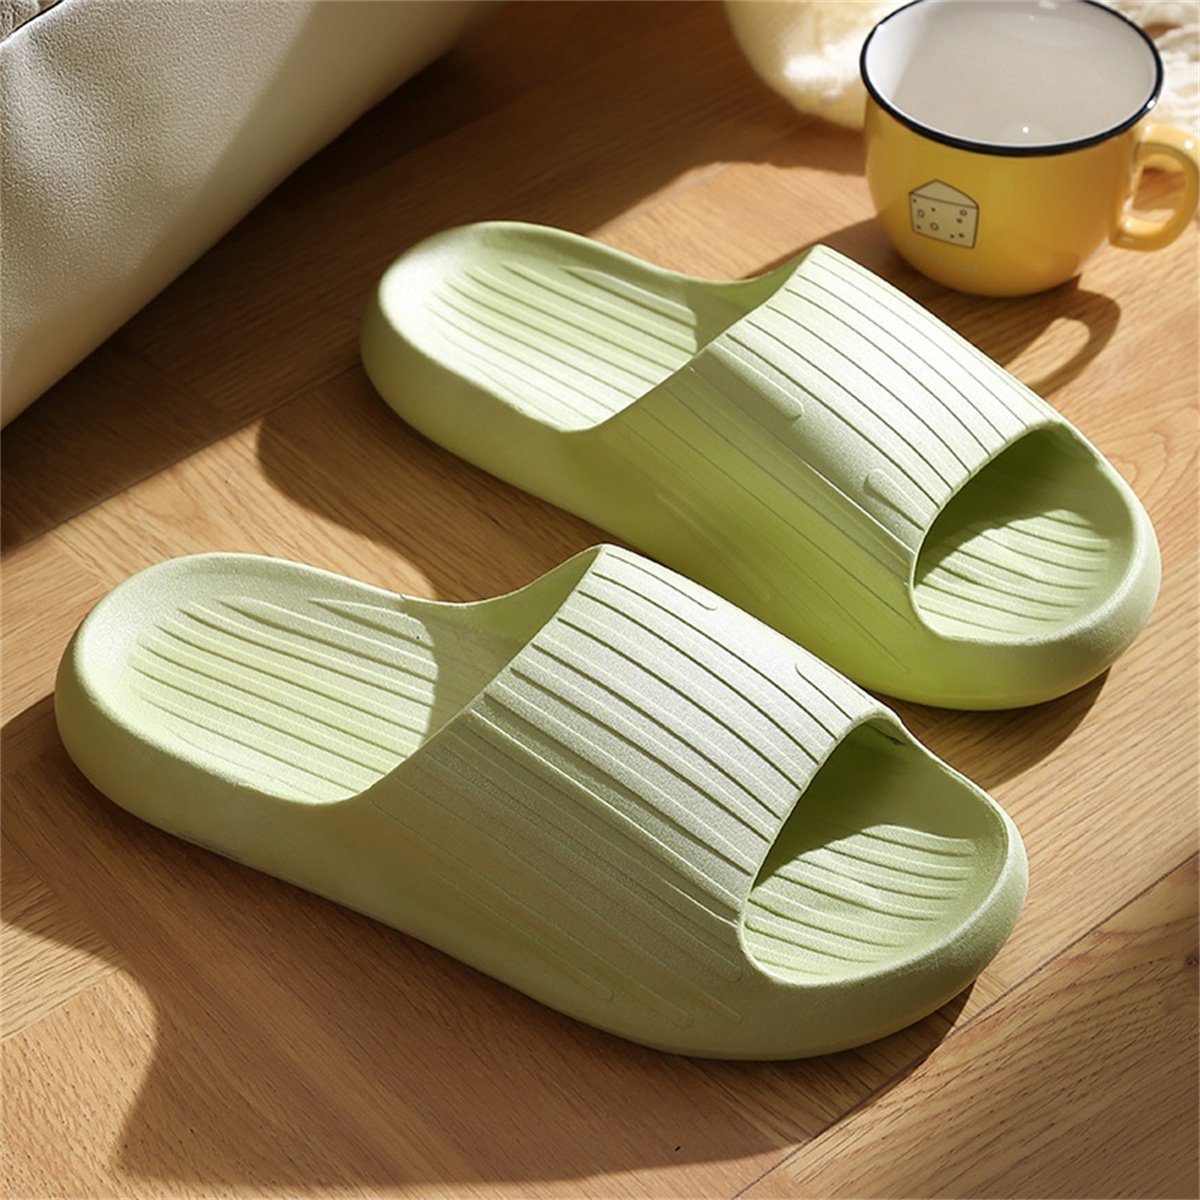 carefully selected Damen-Sandalen und Hausschuhe mit dickem Boden für den Innenbereich Badeschuh grün